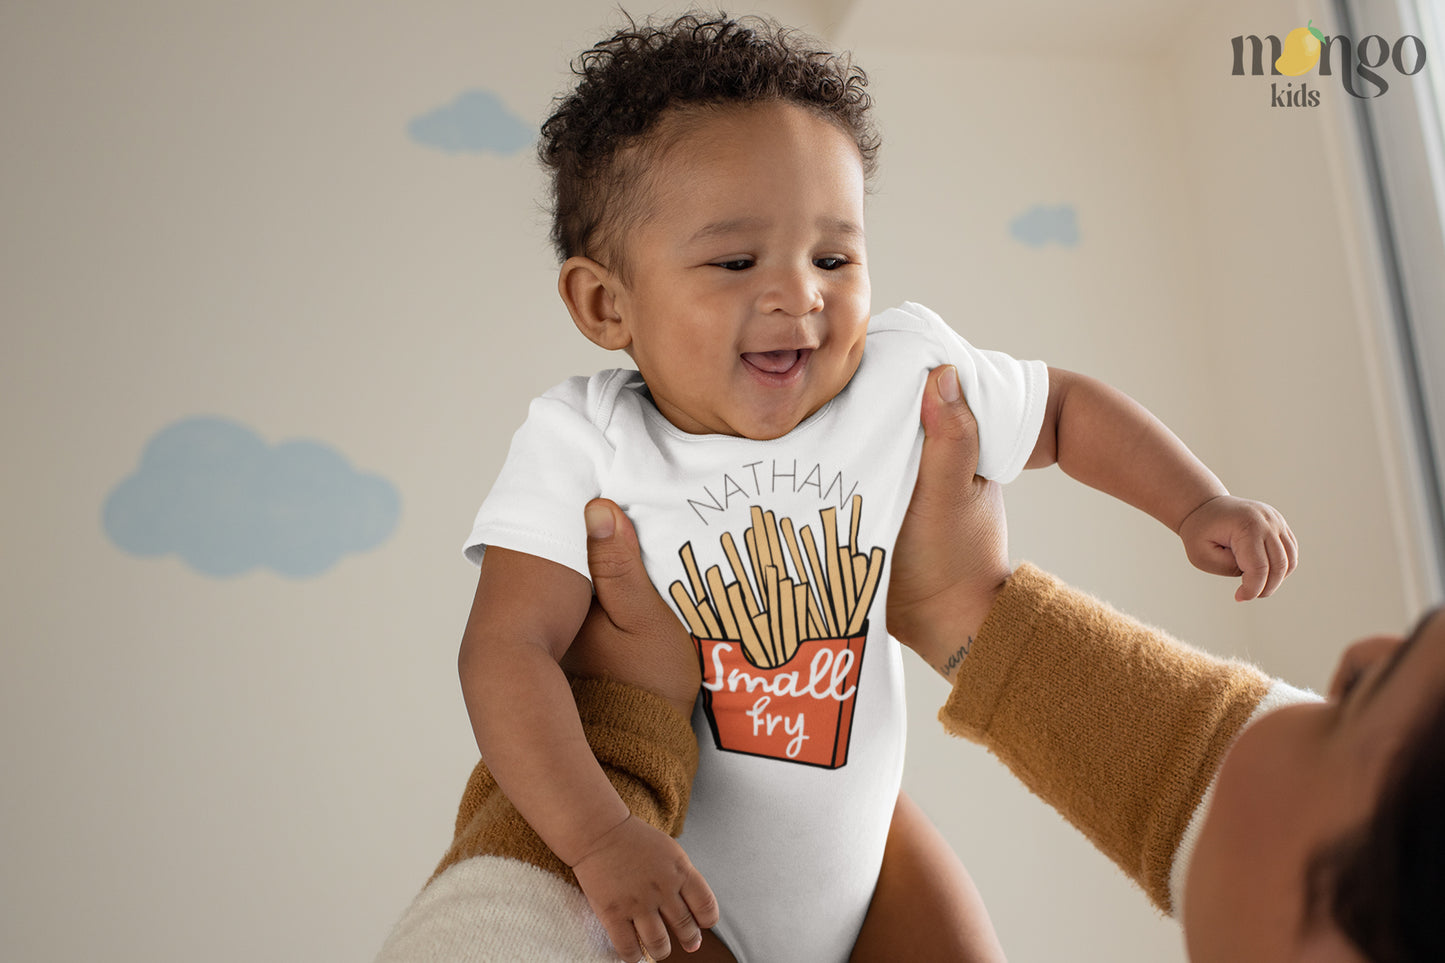 Cute French Fries Kid Tshirt - Small Fry Baby Onsie - Funny Baby Onesie - Newborn Gift - Custom Name